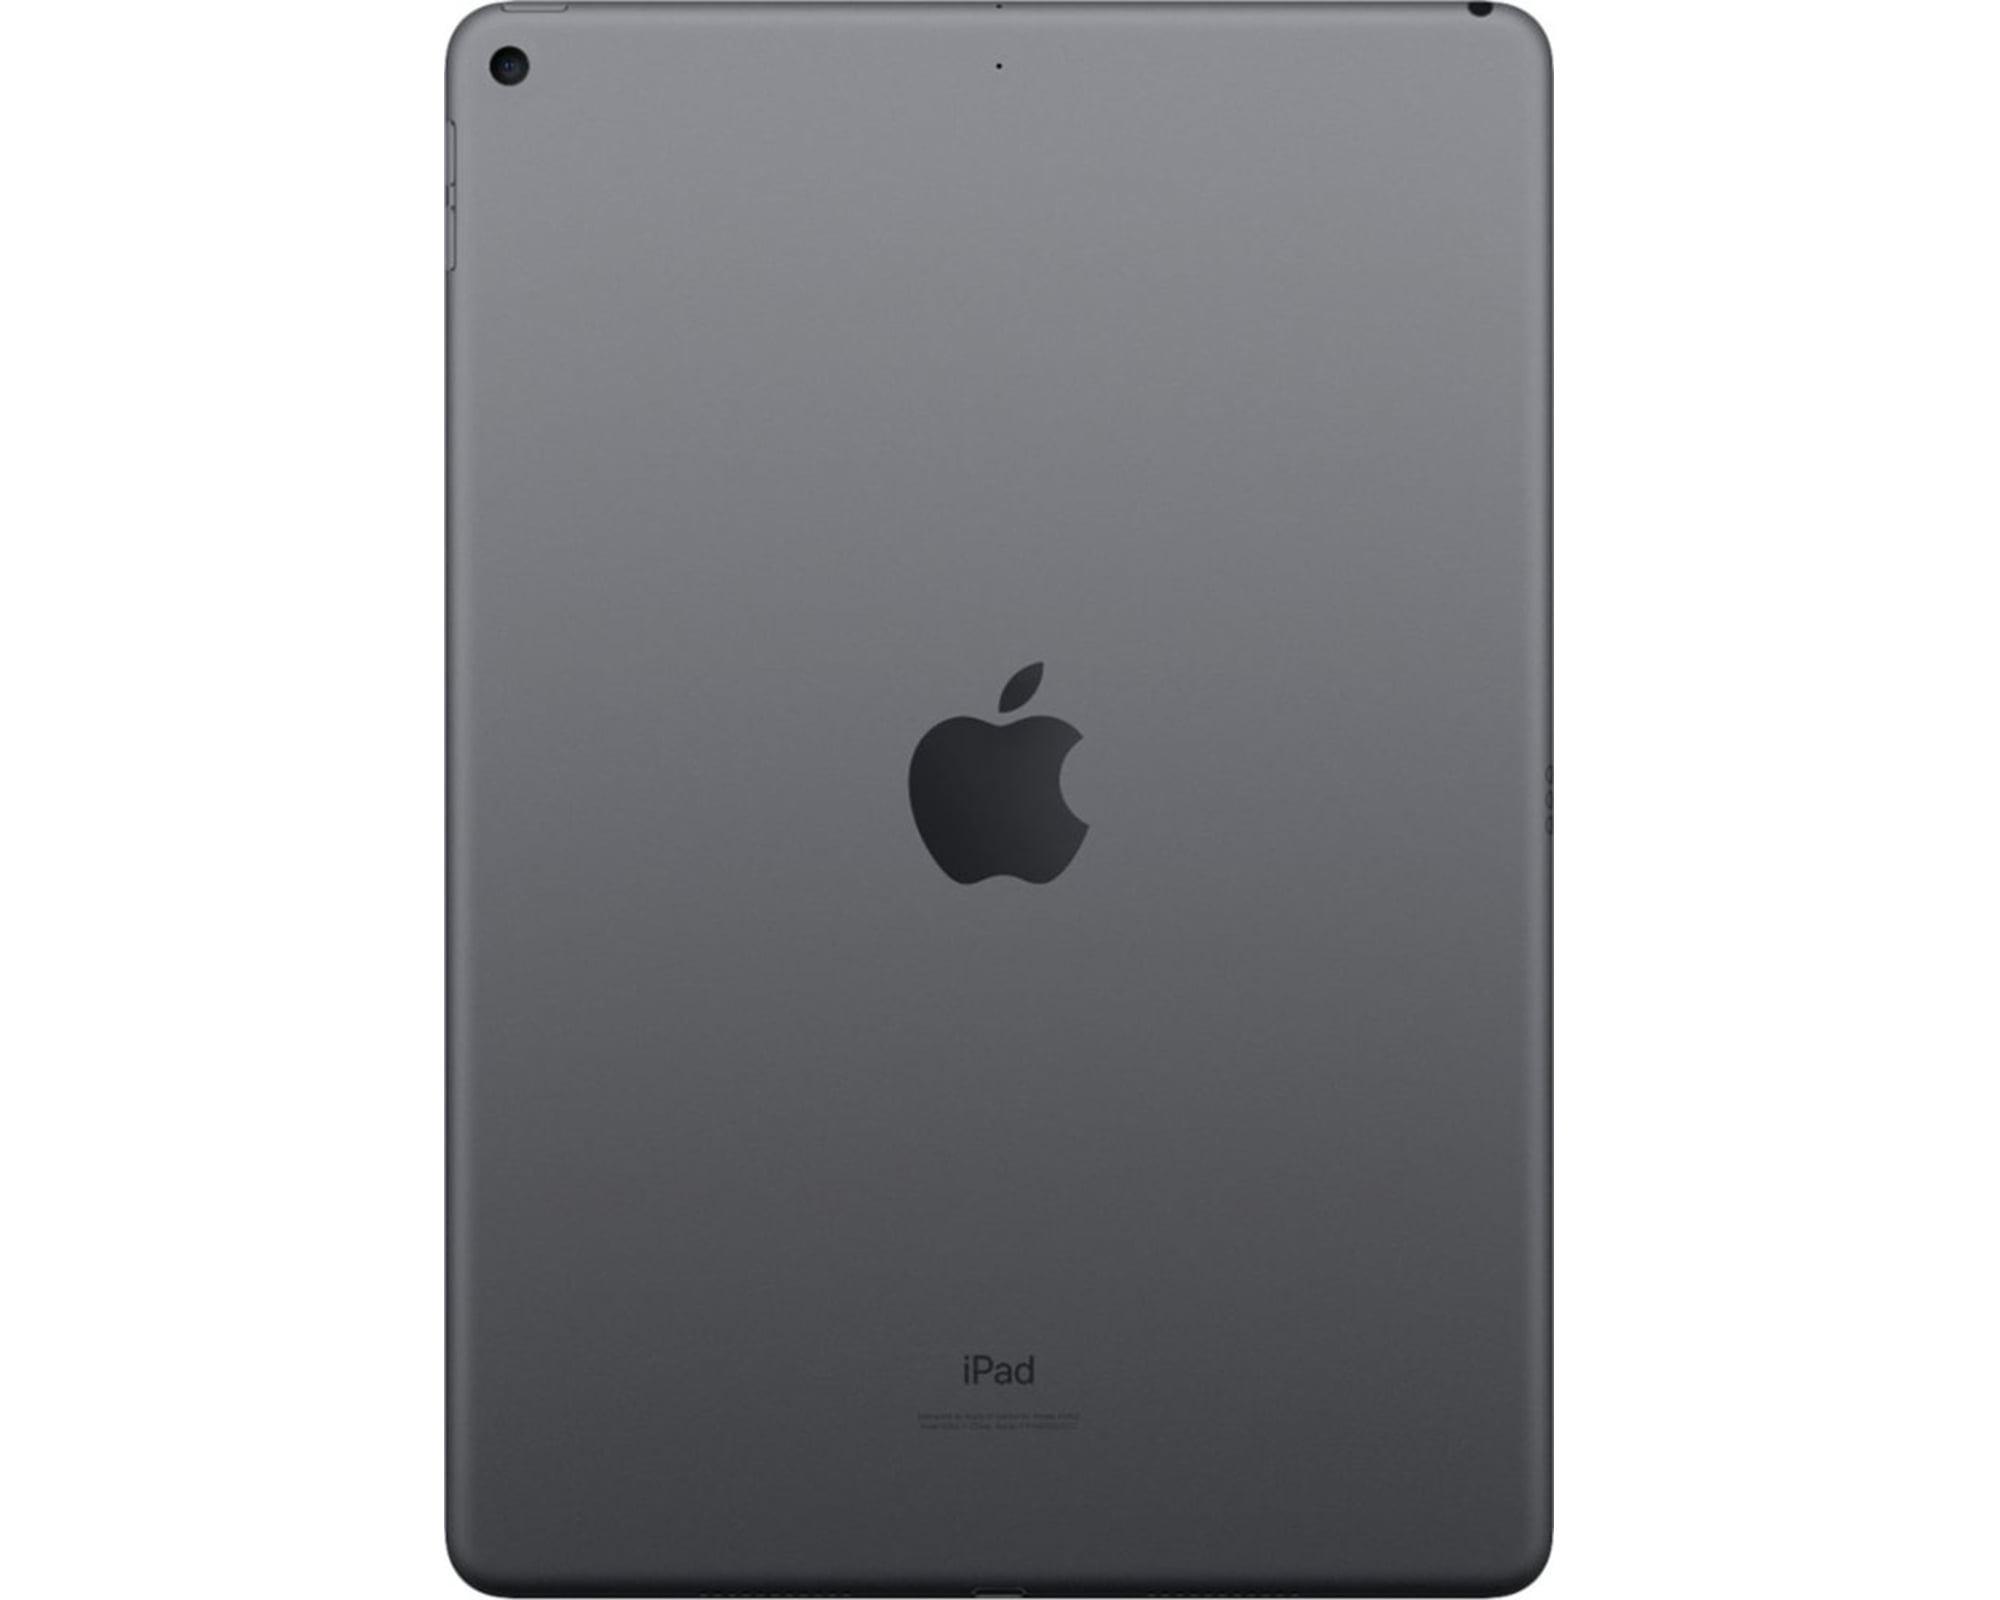 Apple iPad Air 2 - 64GB - Wi-Fi - 6th Gen - 9.7in - Space Gray - MGKL2LL/A  - Scratch & Dent (Refurbished)